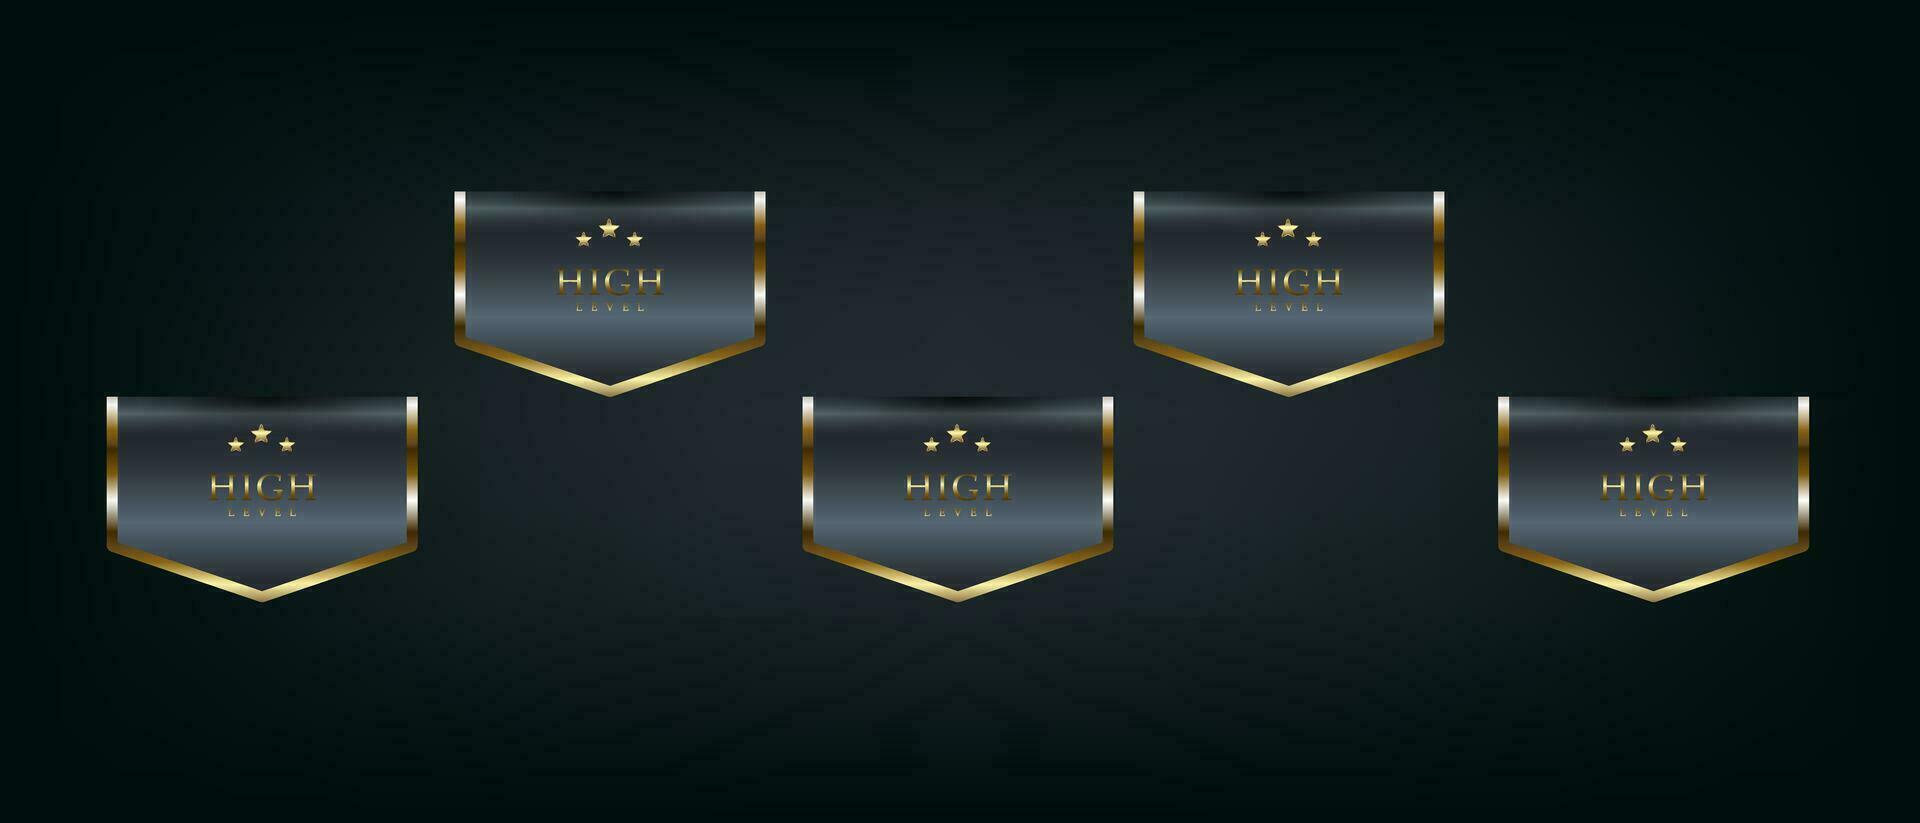 cinco lujo negro y oro cintas vector ilustración en oscuro aislado antecedentes usado para bandera, etiqueta, pegatina concepto modelo